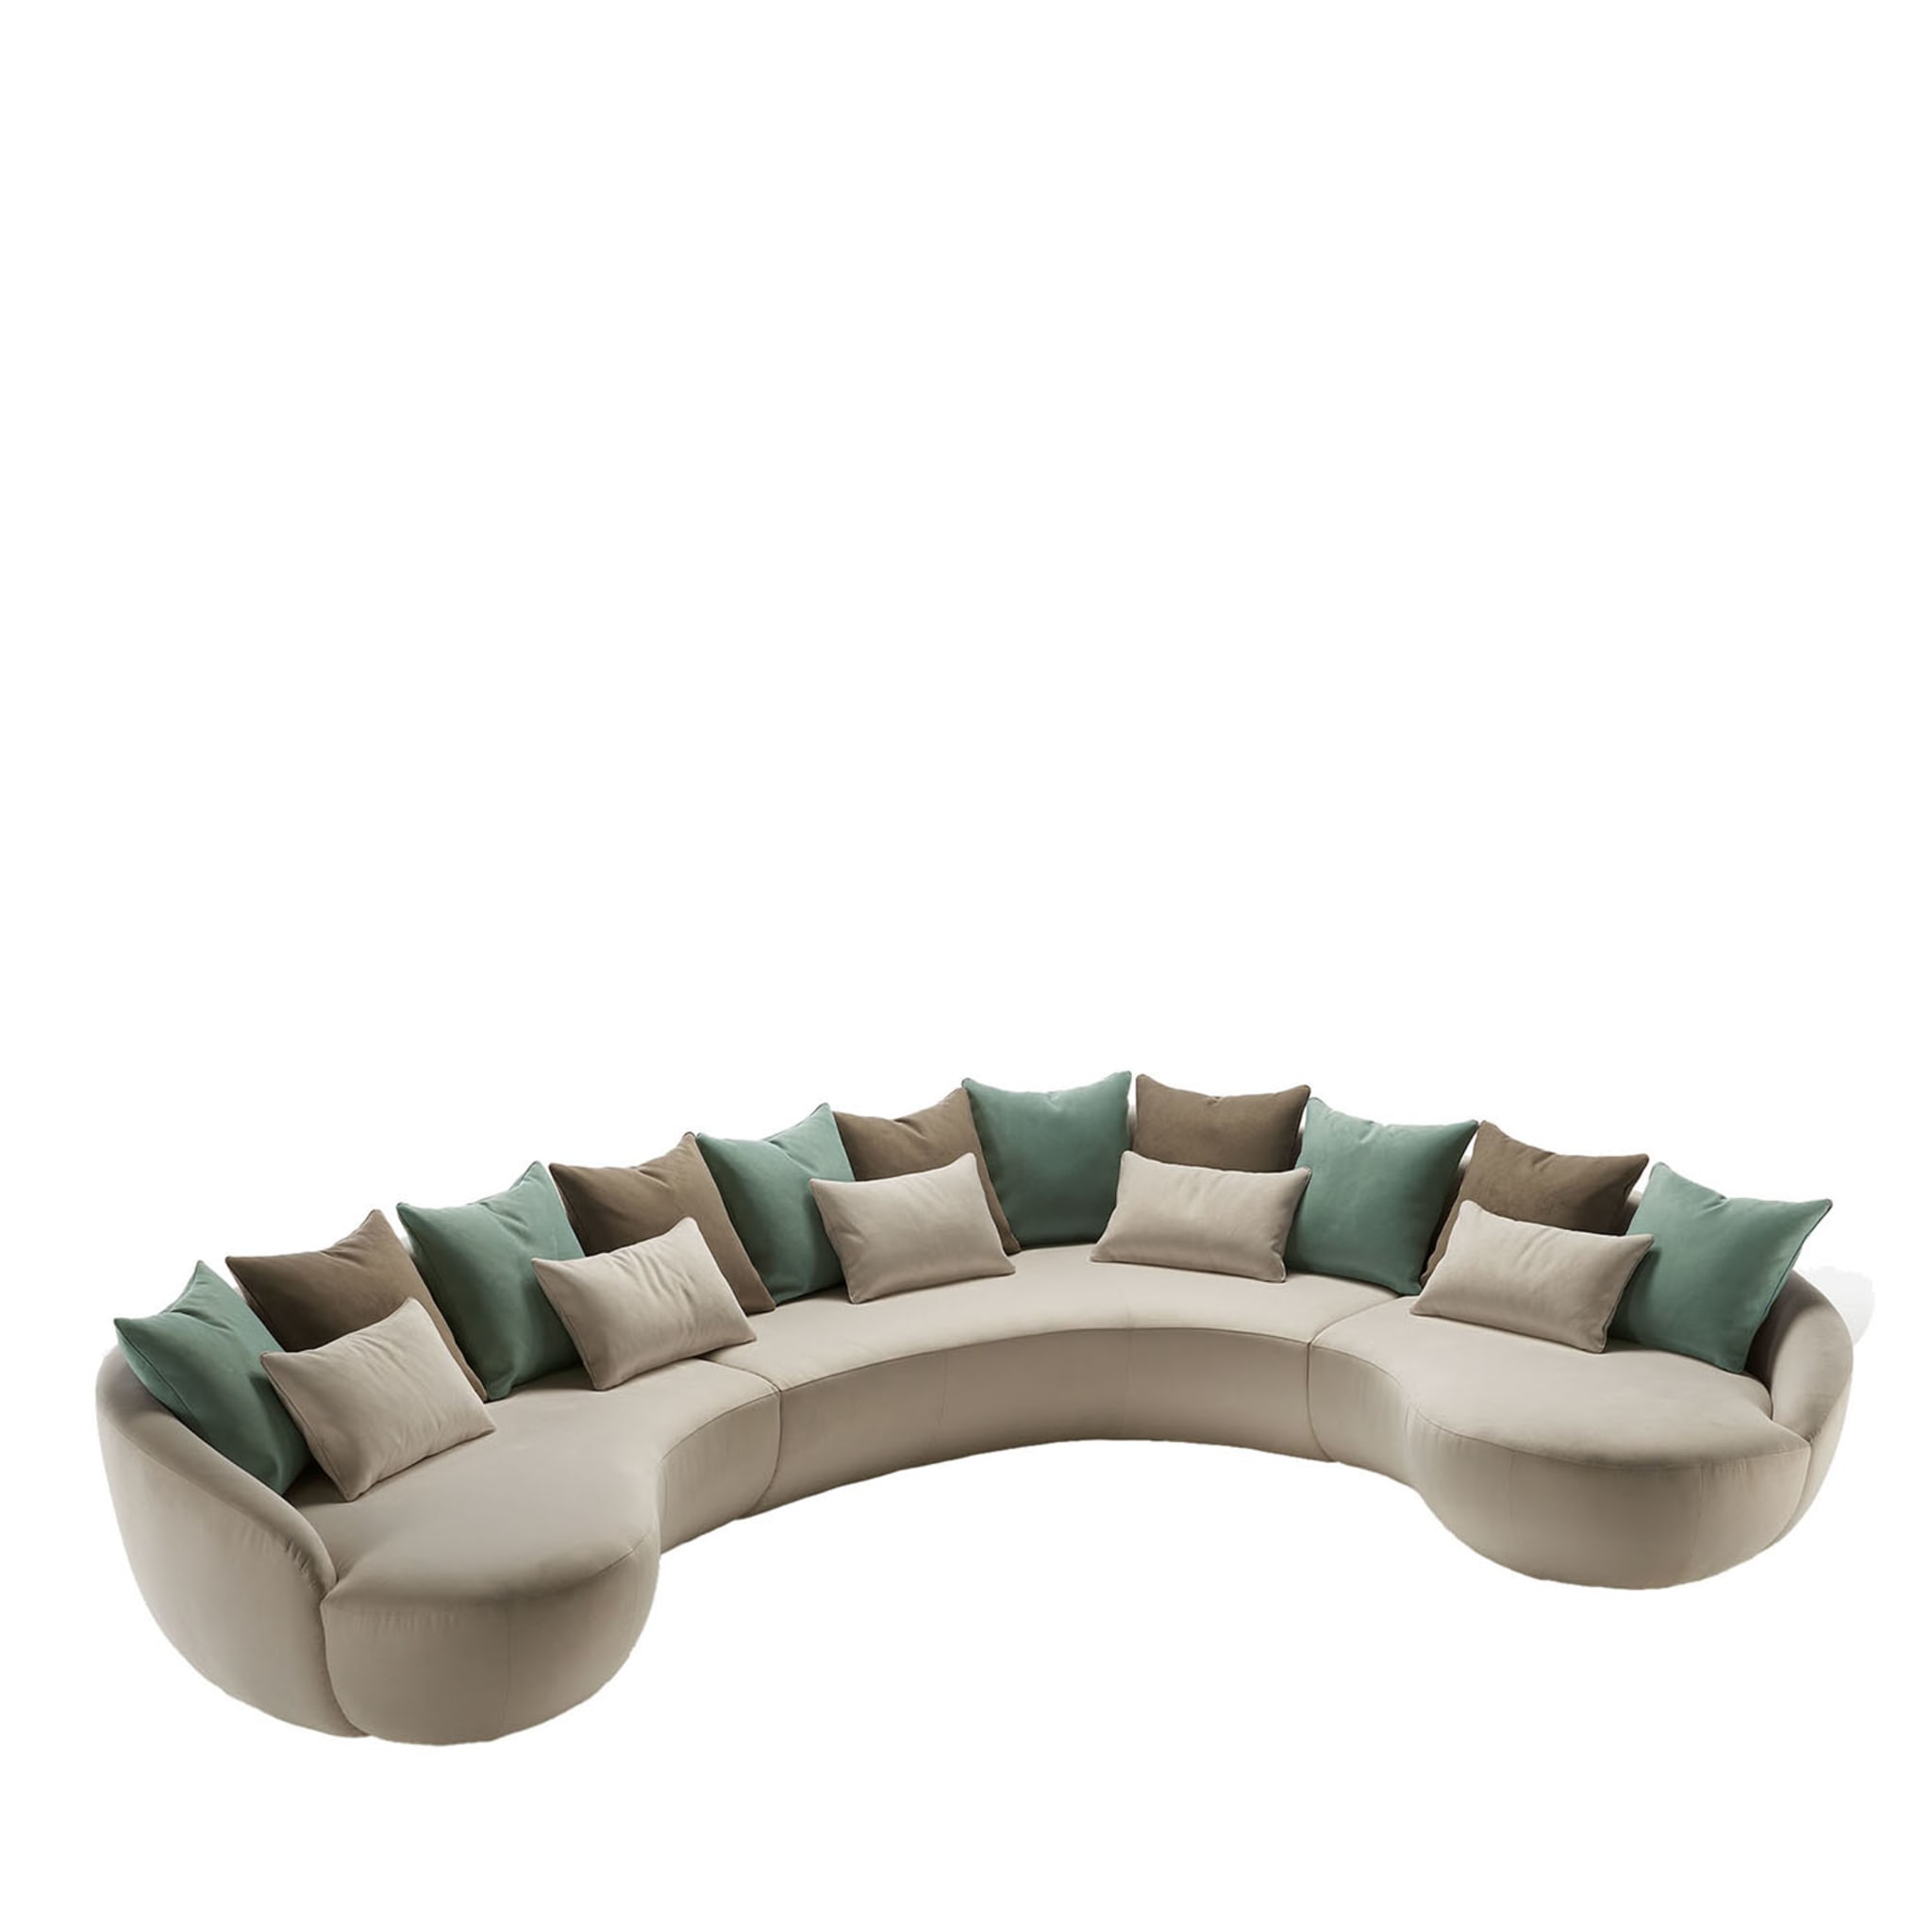 Sidney Curved Modular Beige Sofa - Main view